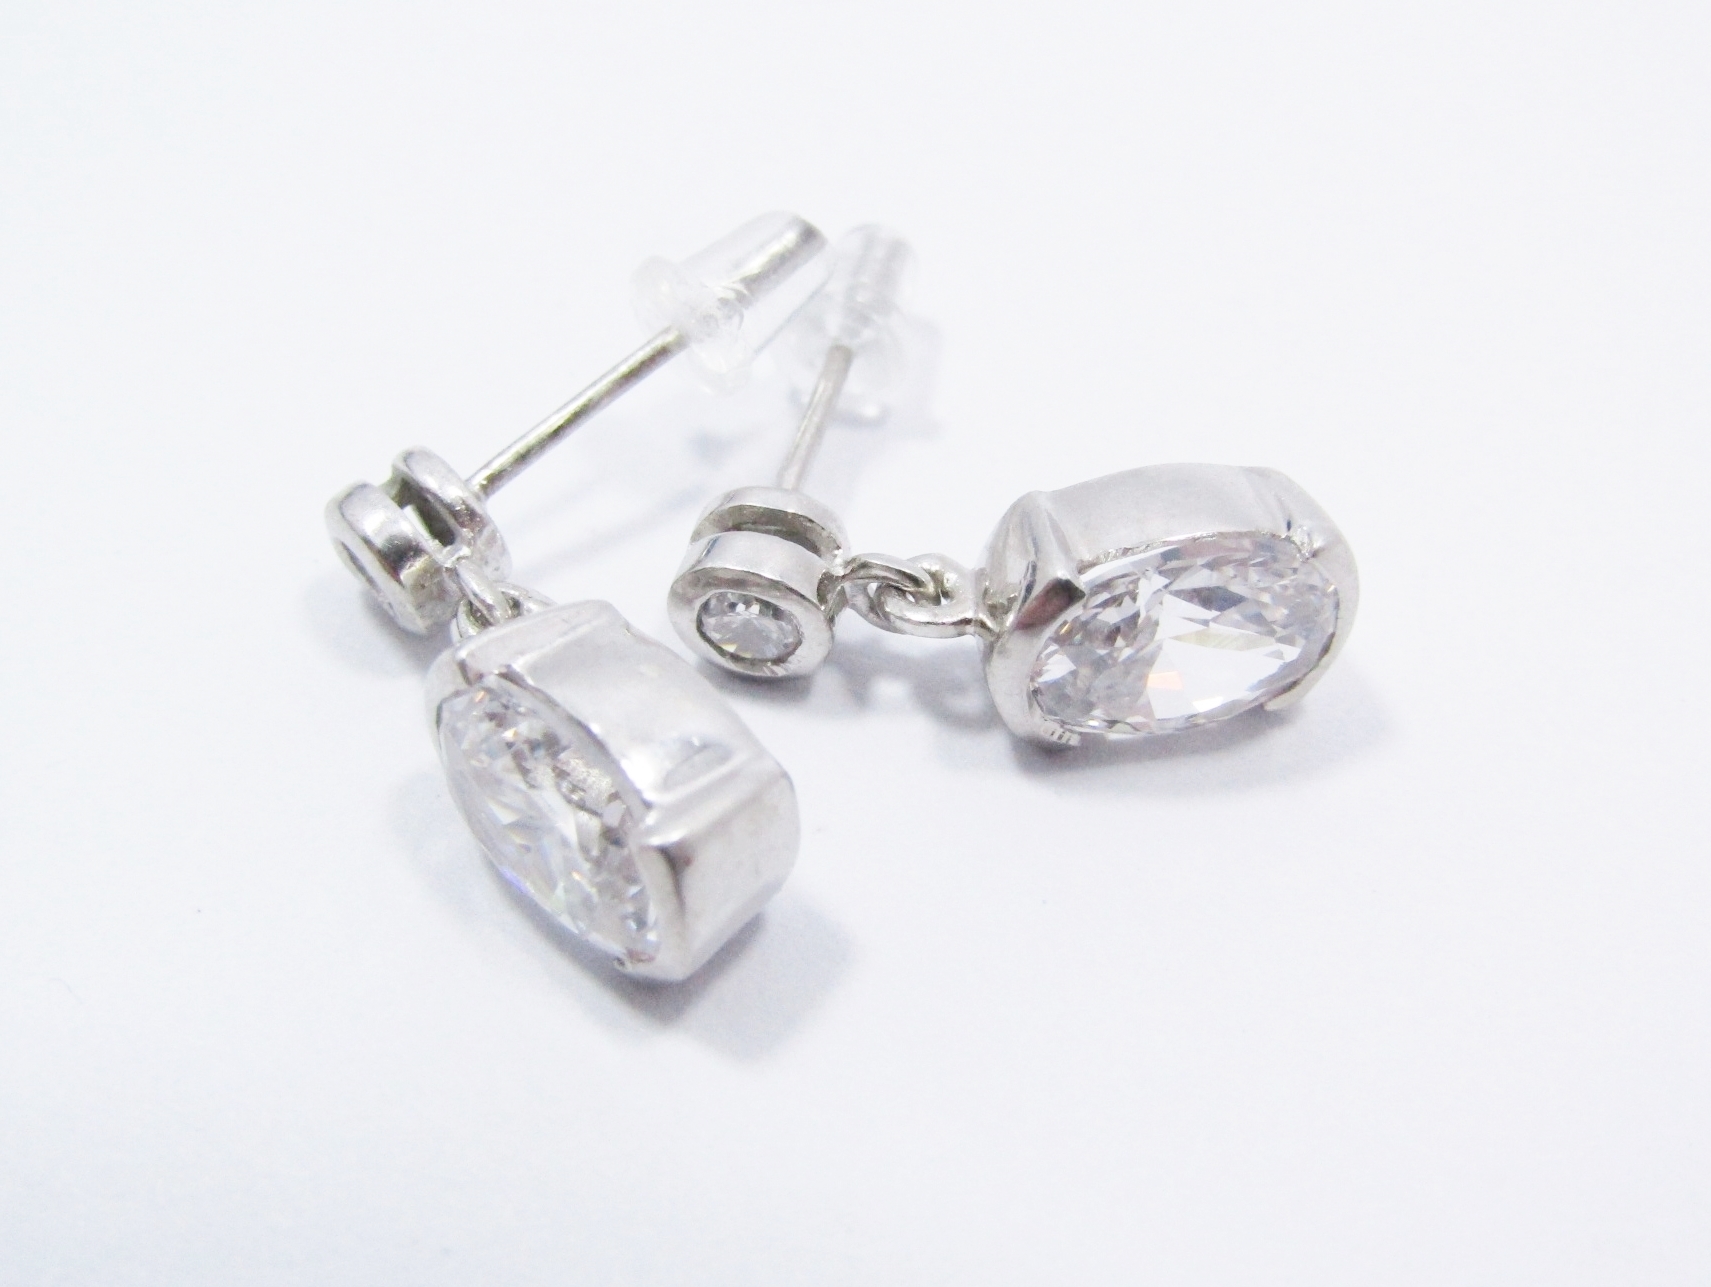 A lovely Pair of Dangling Zirconia Drop Earrings in Sterling Silver.